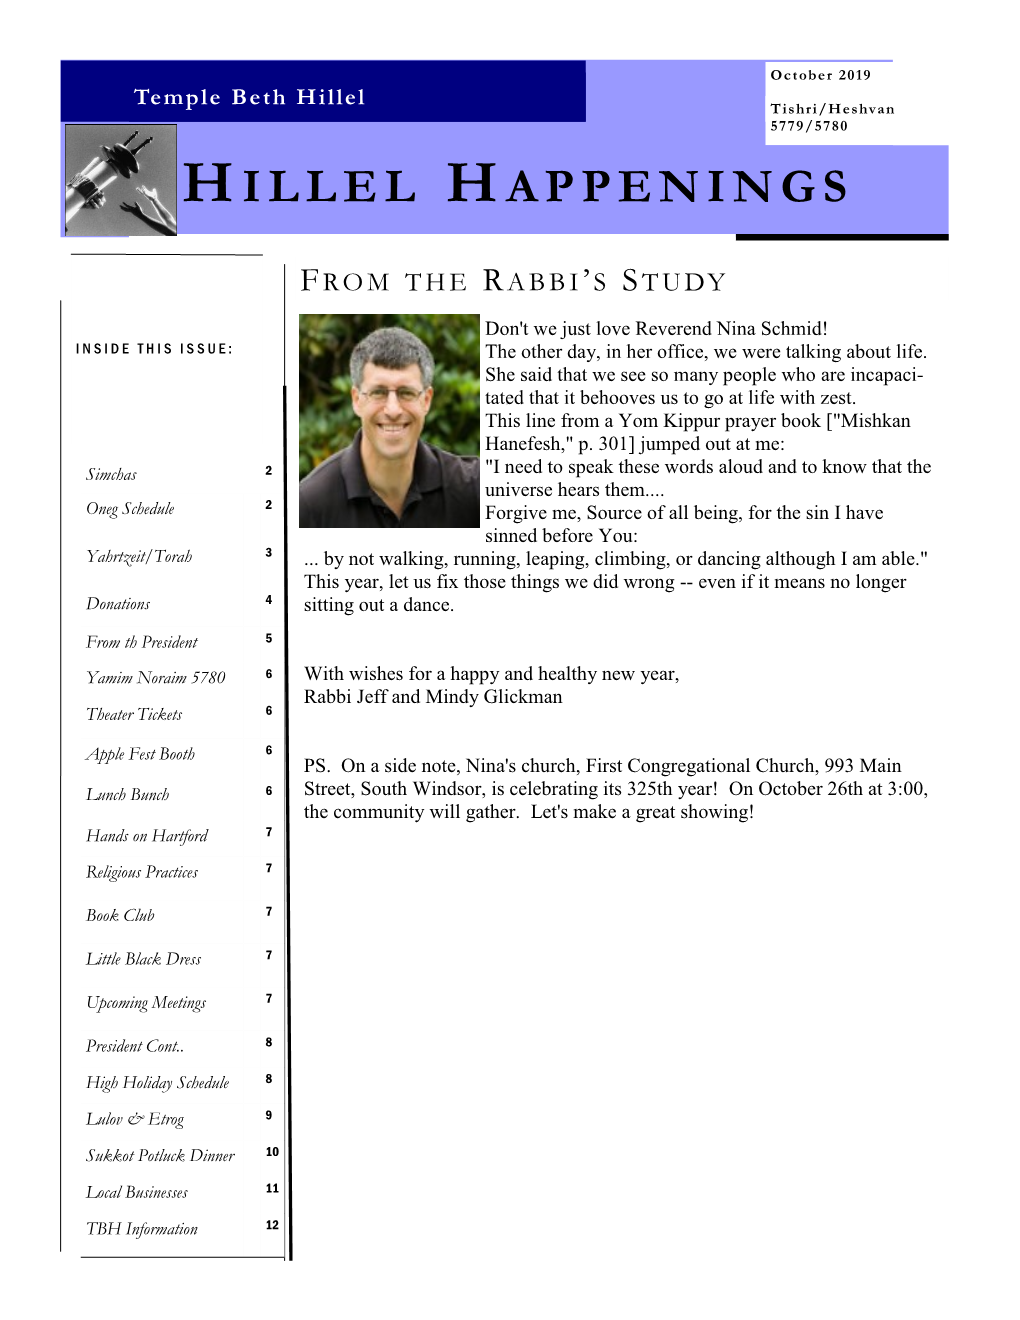 Hillel Happenings Advertising Rates